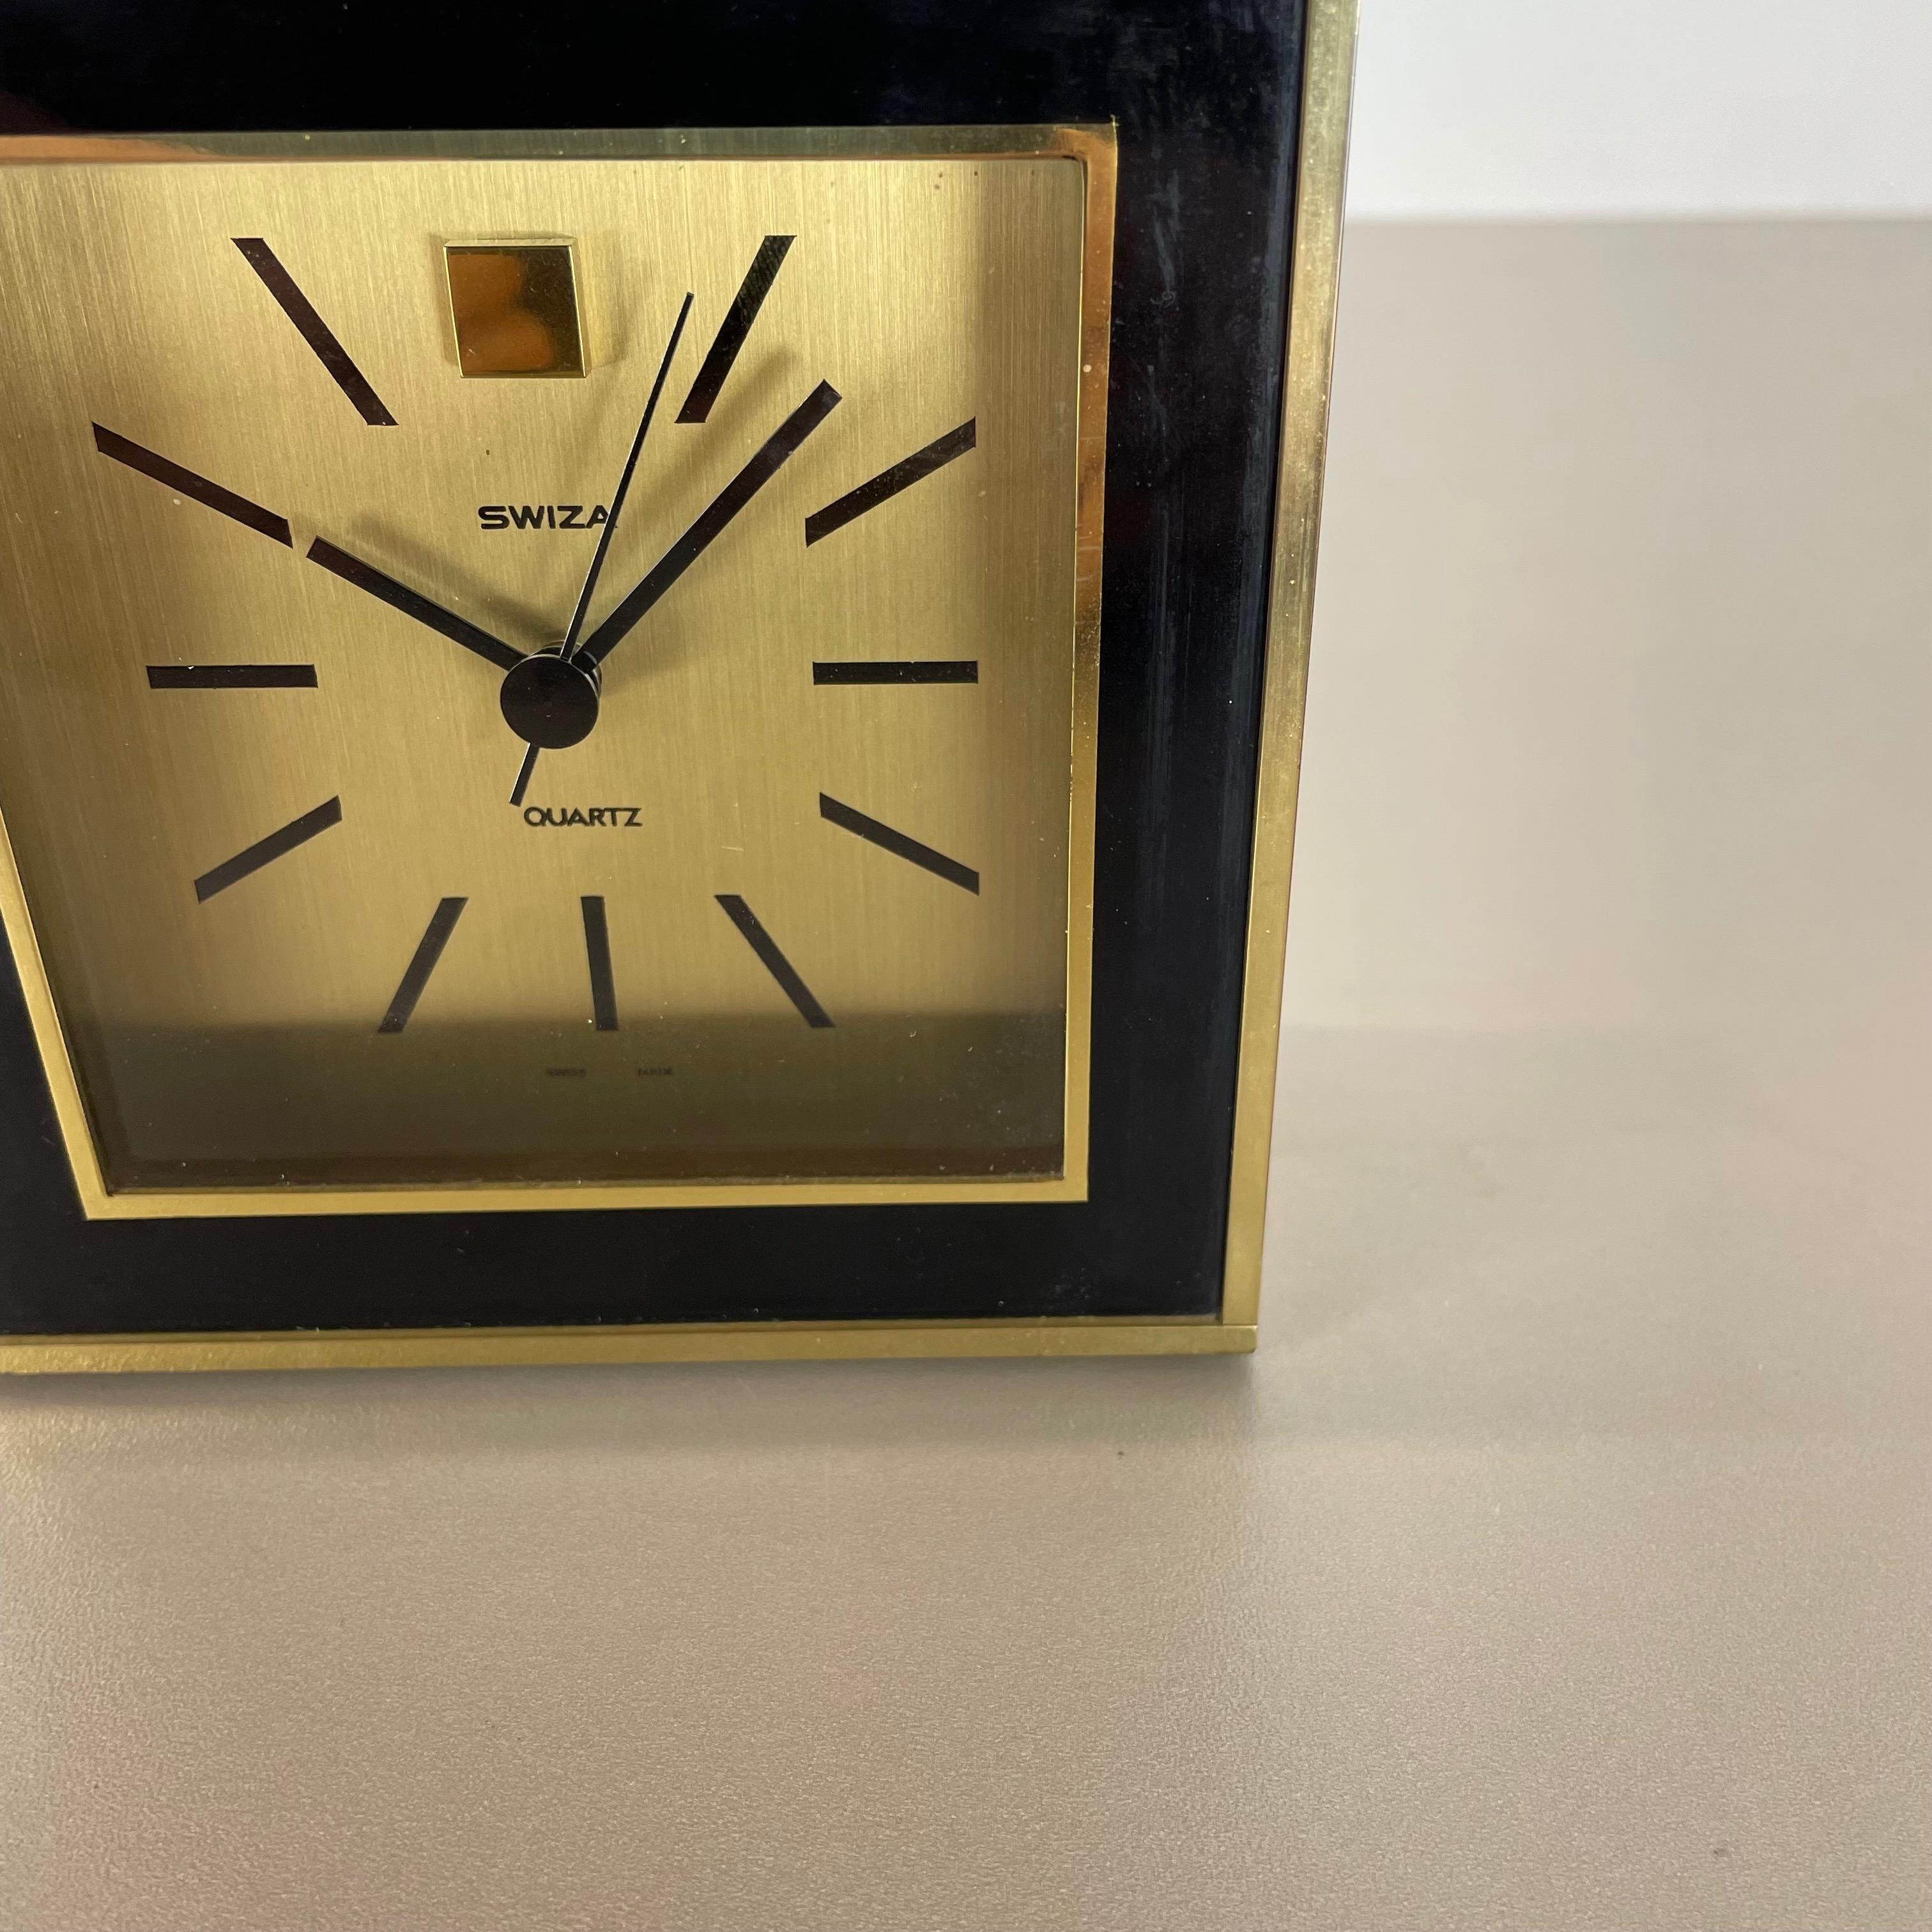 20th Century Vintage Modernist Wooden Brass Table Clock by Swiza, Switzerland 1970s